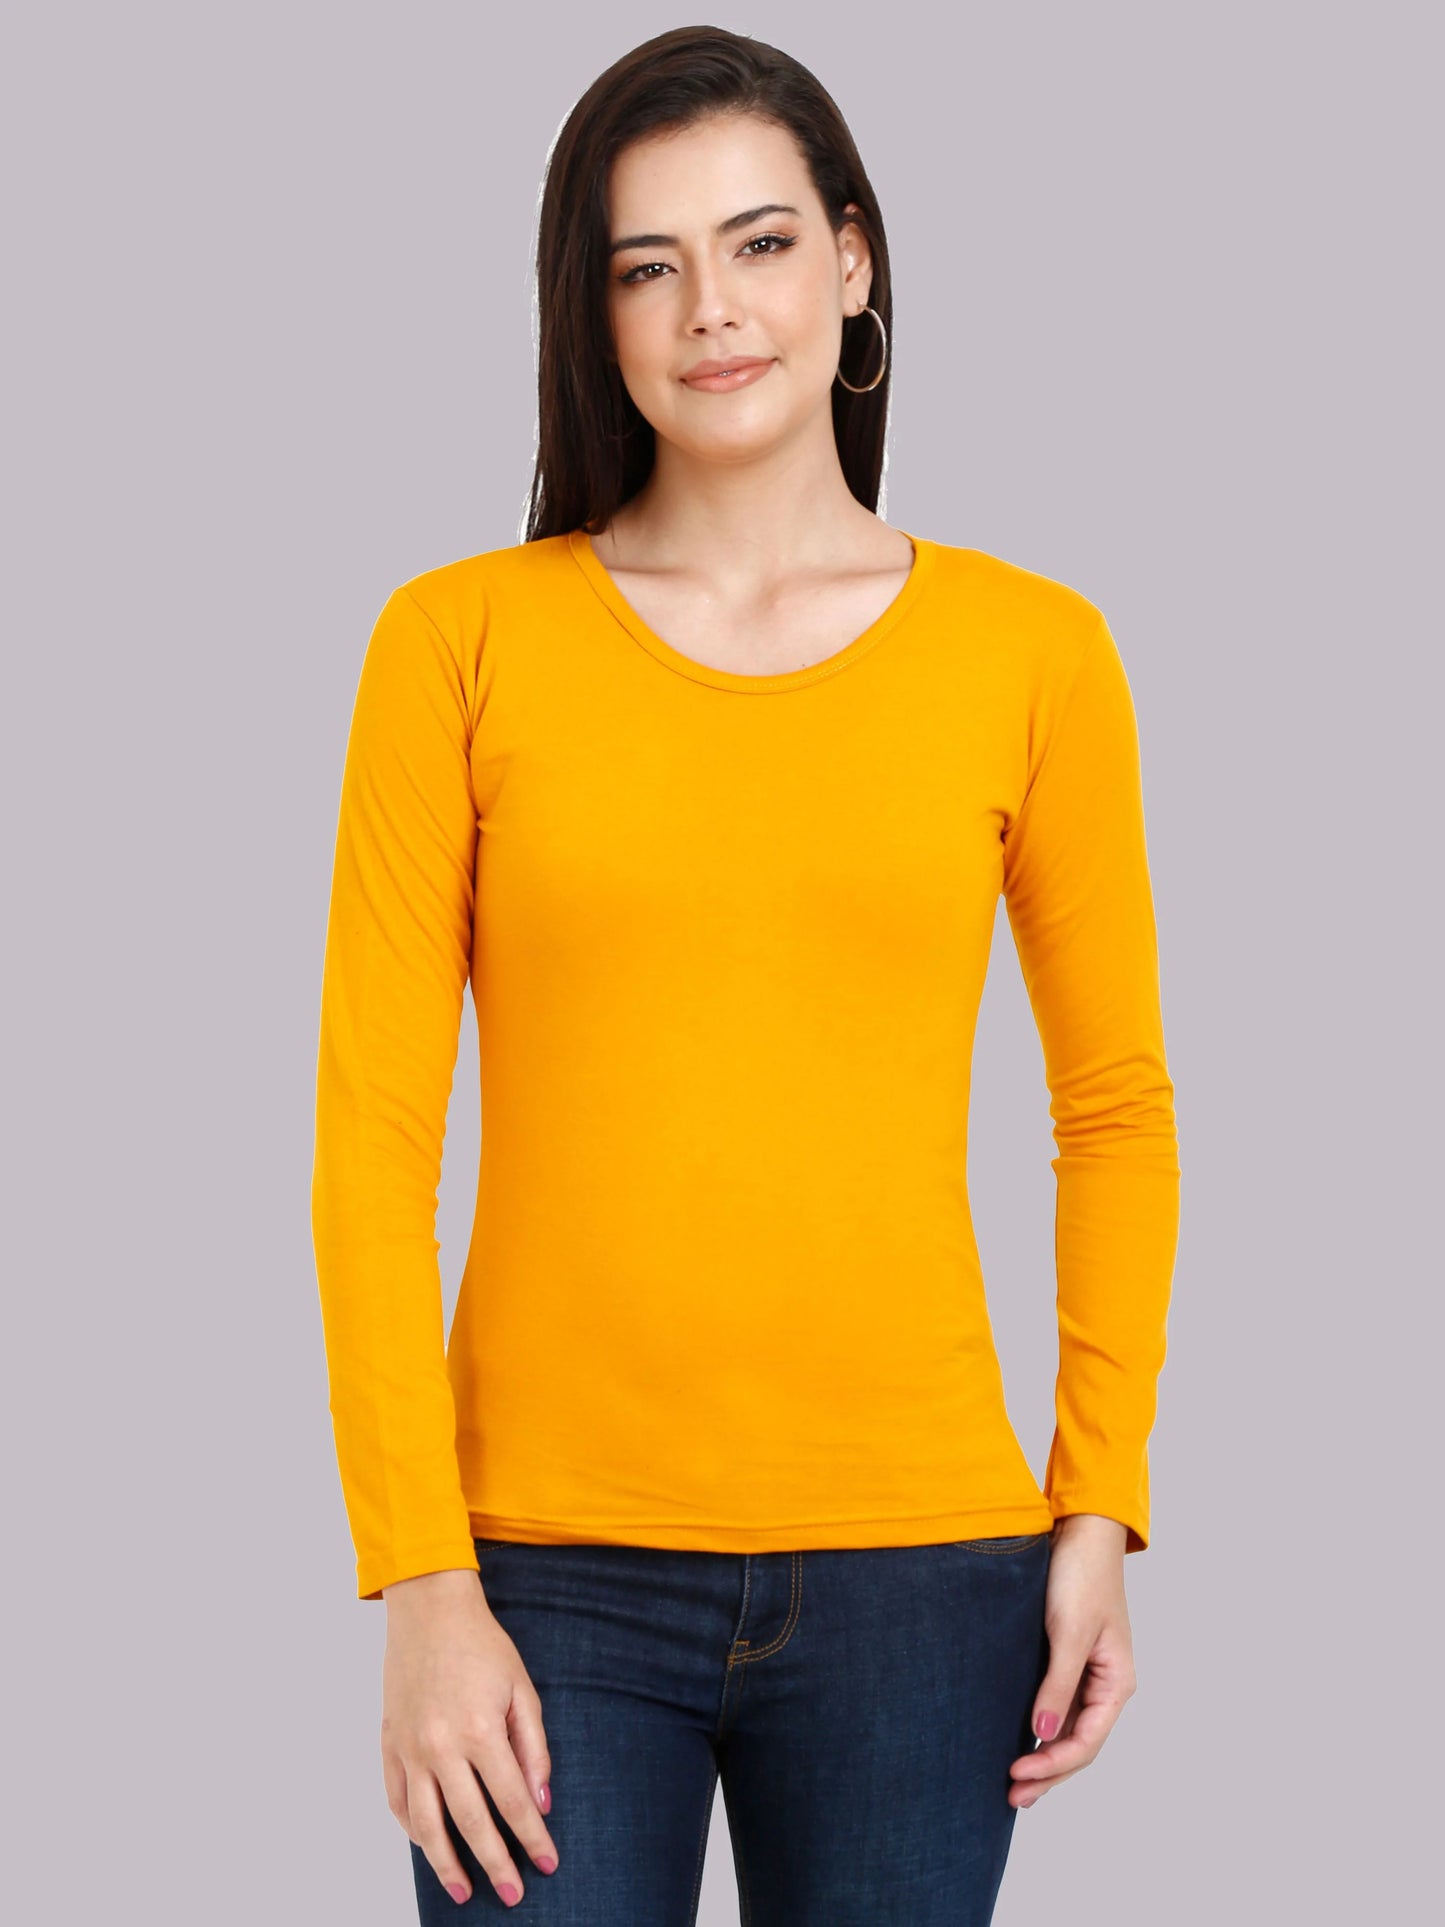 Fleximaa Women's Cotton Plain Round Neck Full Sleeve T-Shirt (Pack of 2) - Fleximaa